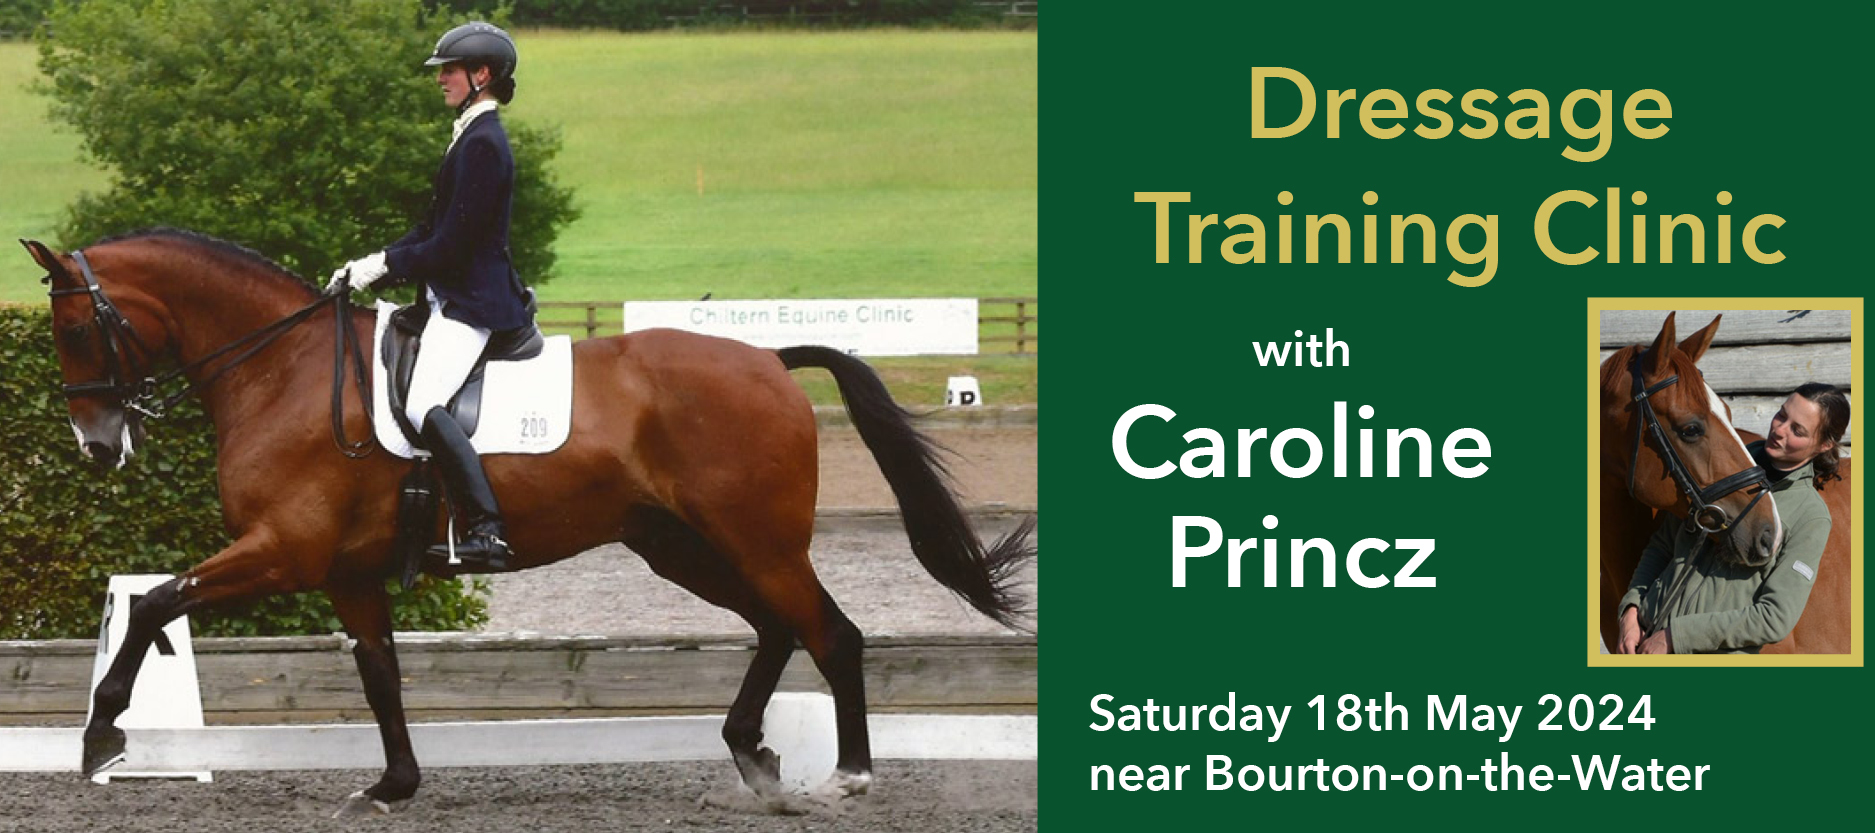 Dressage Training with Caroline Princz 18th May